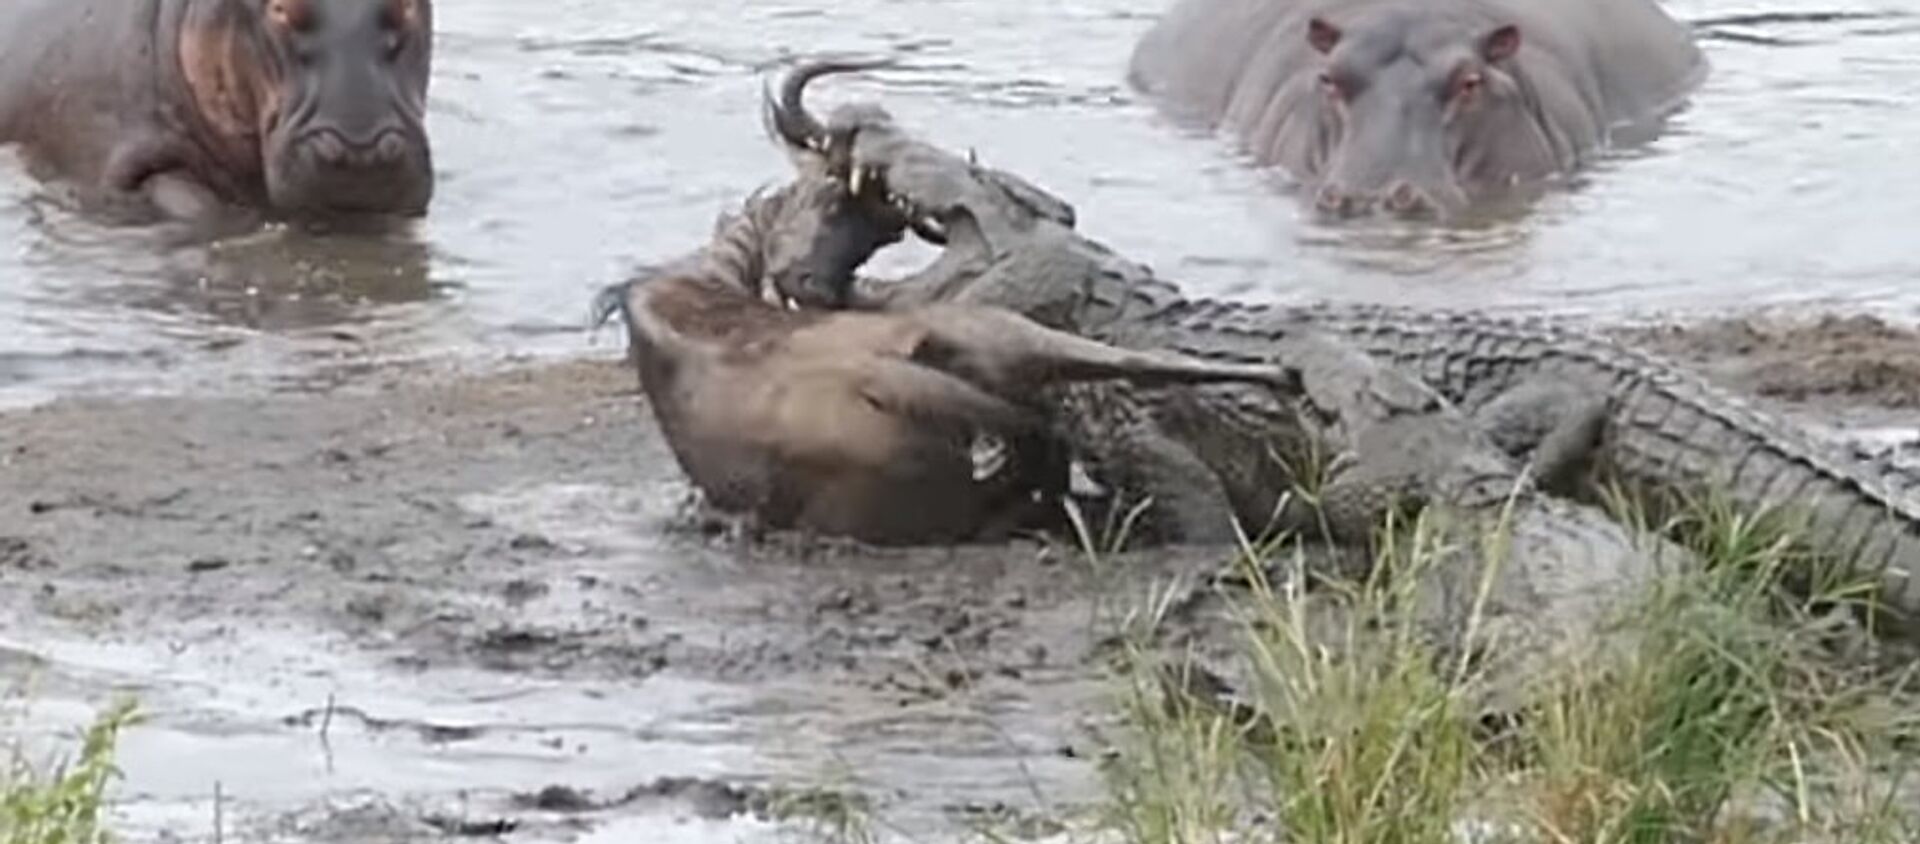 Hipopótamos salvan un ñu de las mandíbulas de un cocodrilo - Sputnik Mundo, 1920, 24.05.2018